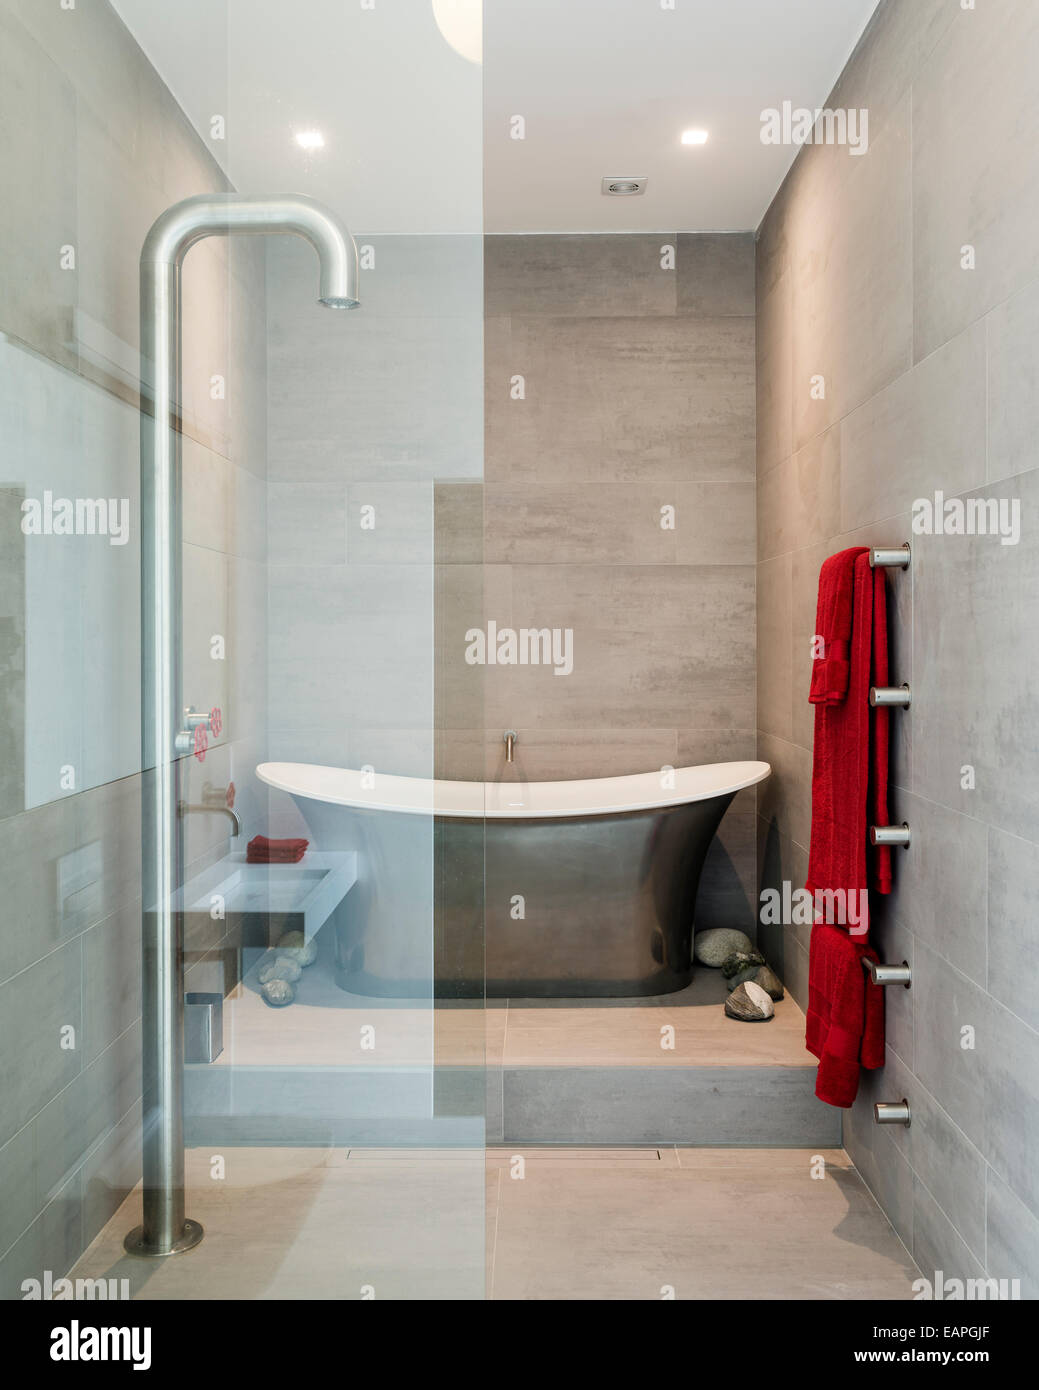 Aegean metallic platinum bath by Ashton and Bentley in bathroom with Boffi fixed floor shower Stock Photo